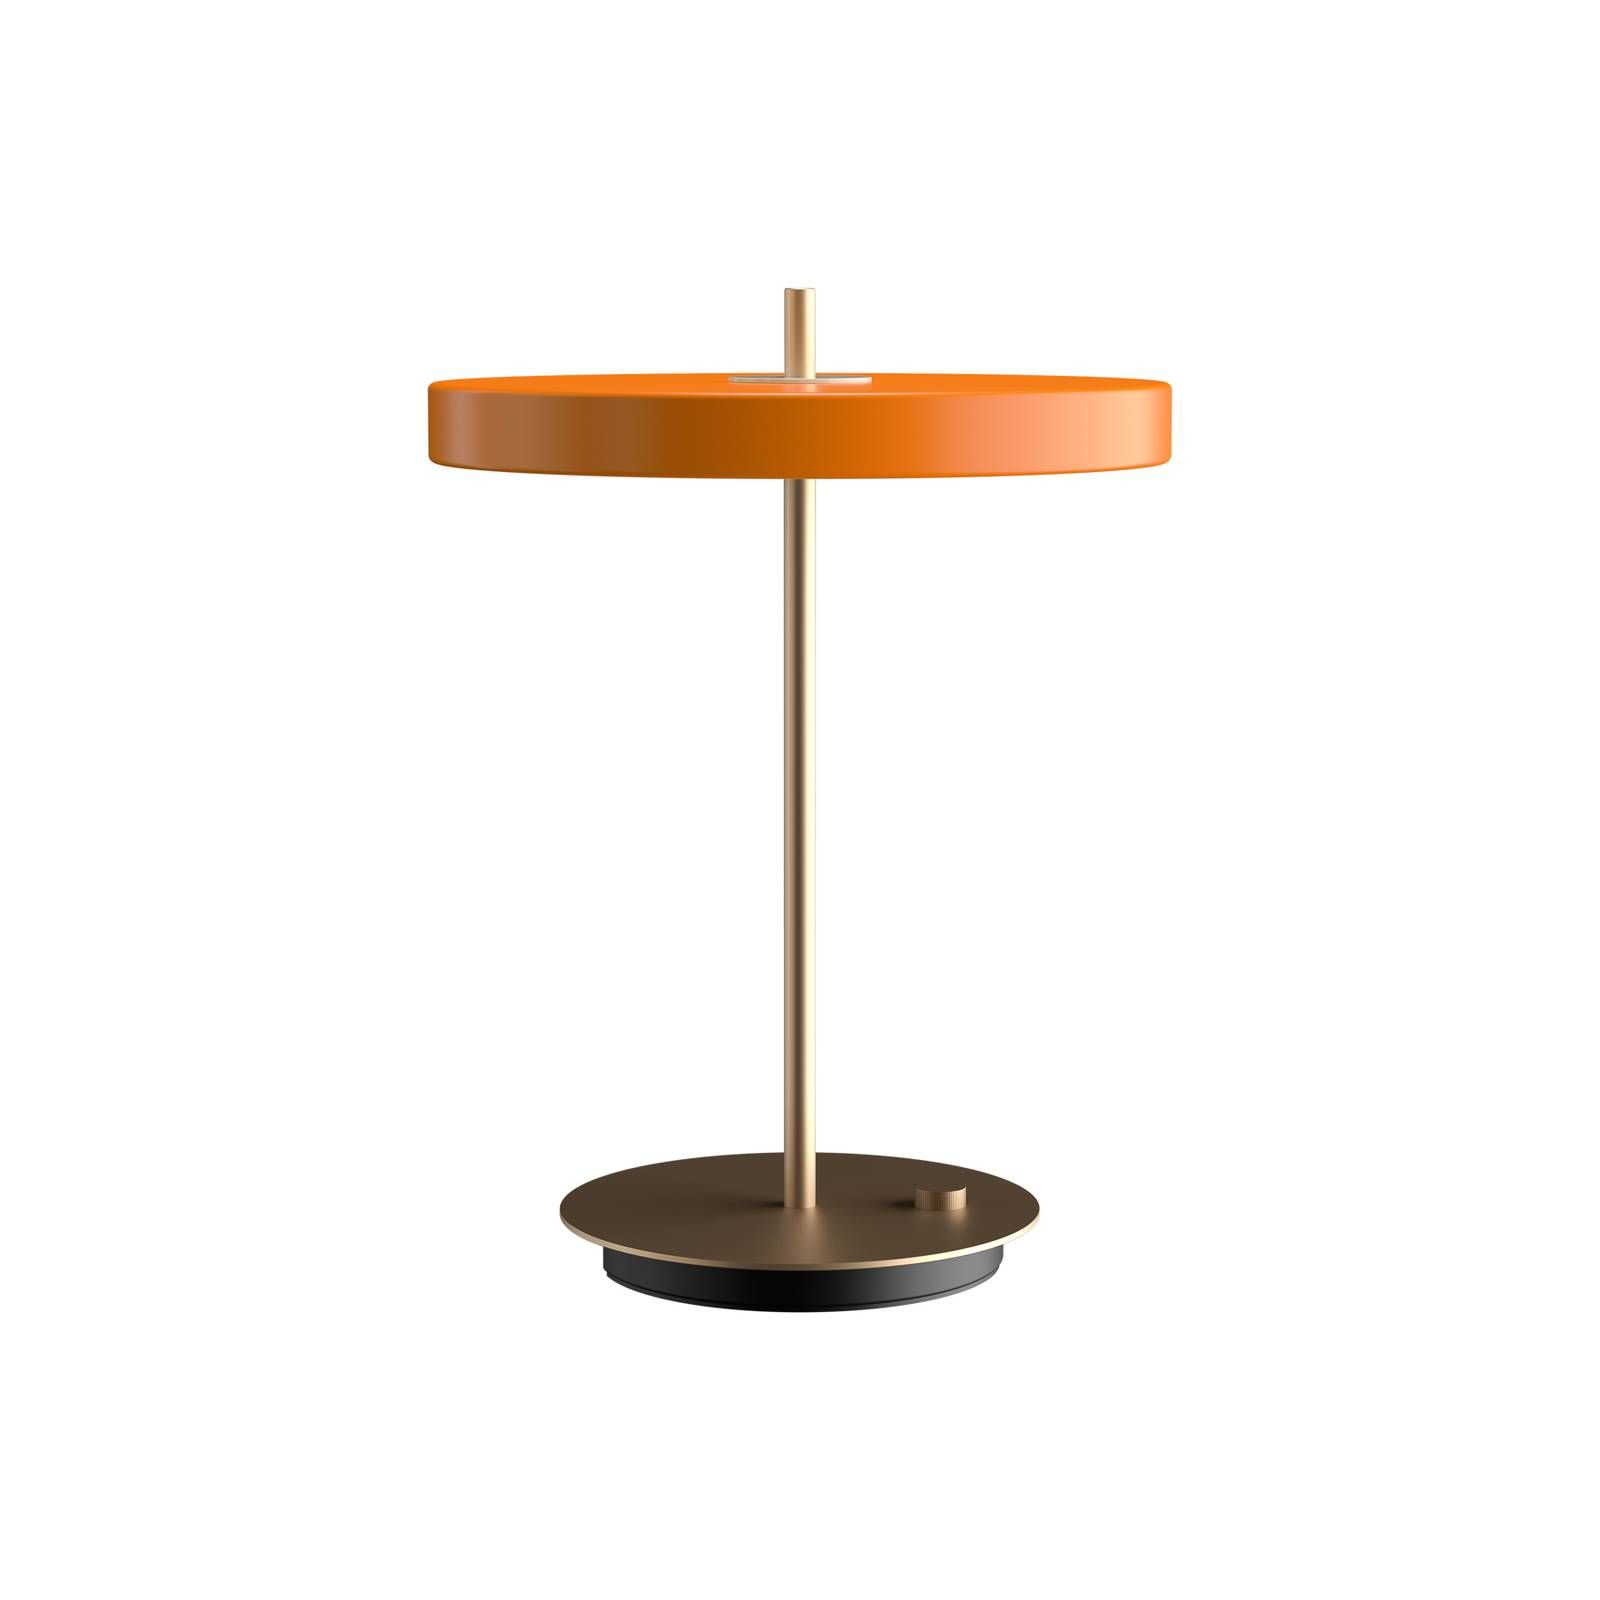 UMAGE stolová LED lampa Asteria Table USB oranžová, Obývacia izba / jedáleň, plast, oceľ, hliník, akryl, 13W, K: 41.5cm